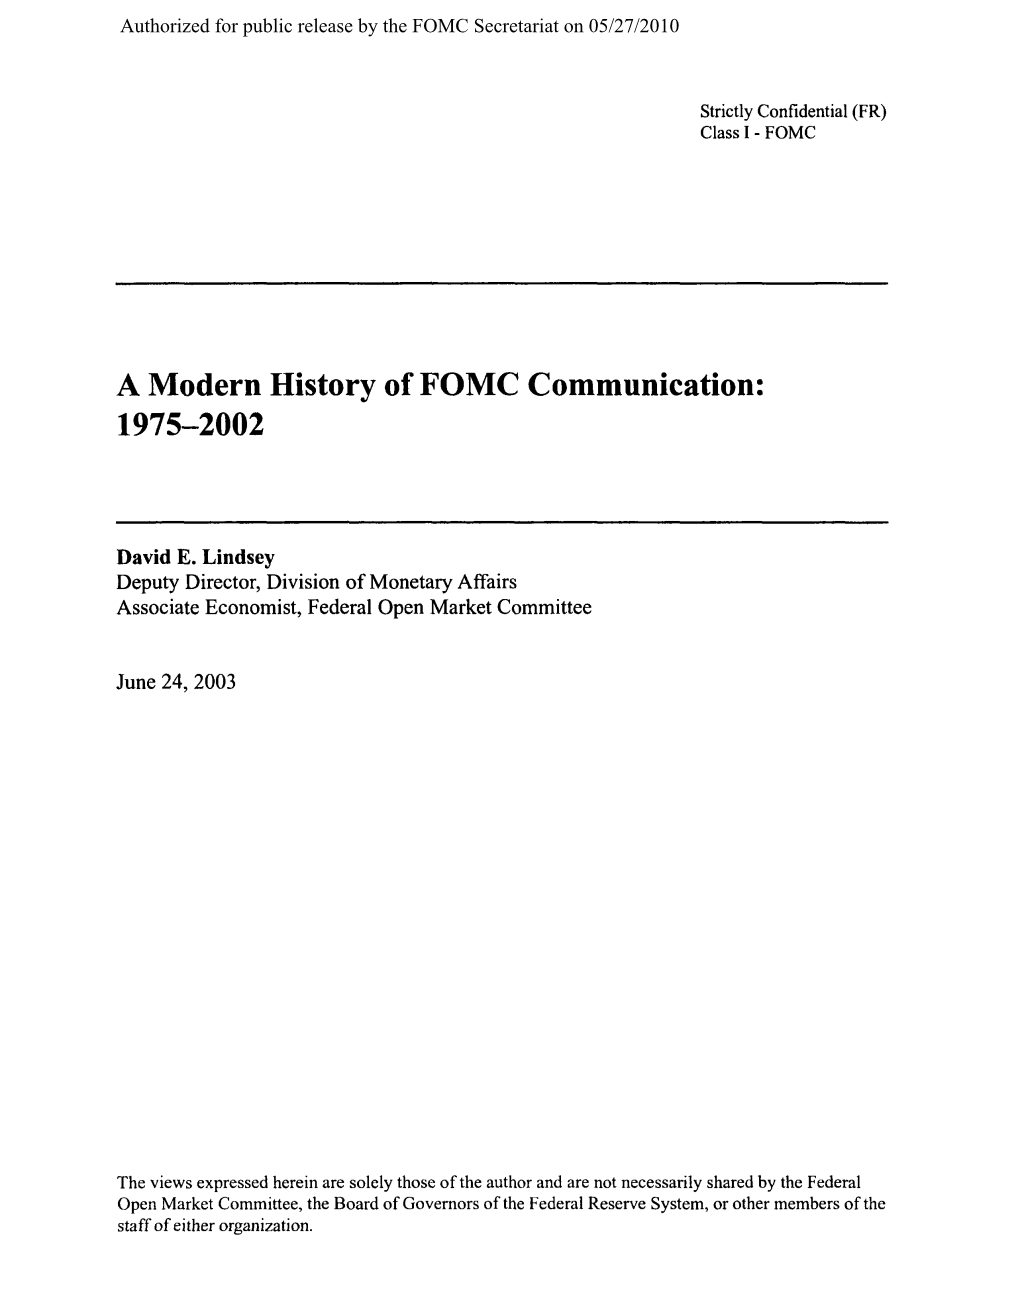 A Modern History of FOMC Communication: 1975-2002